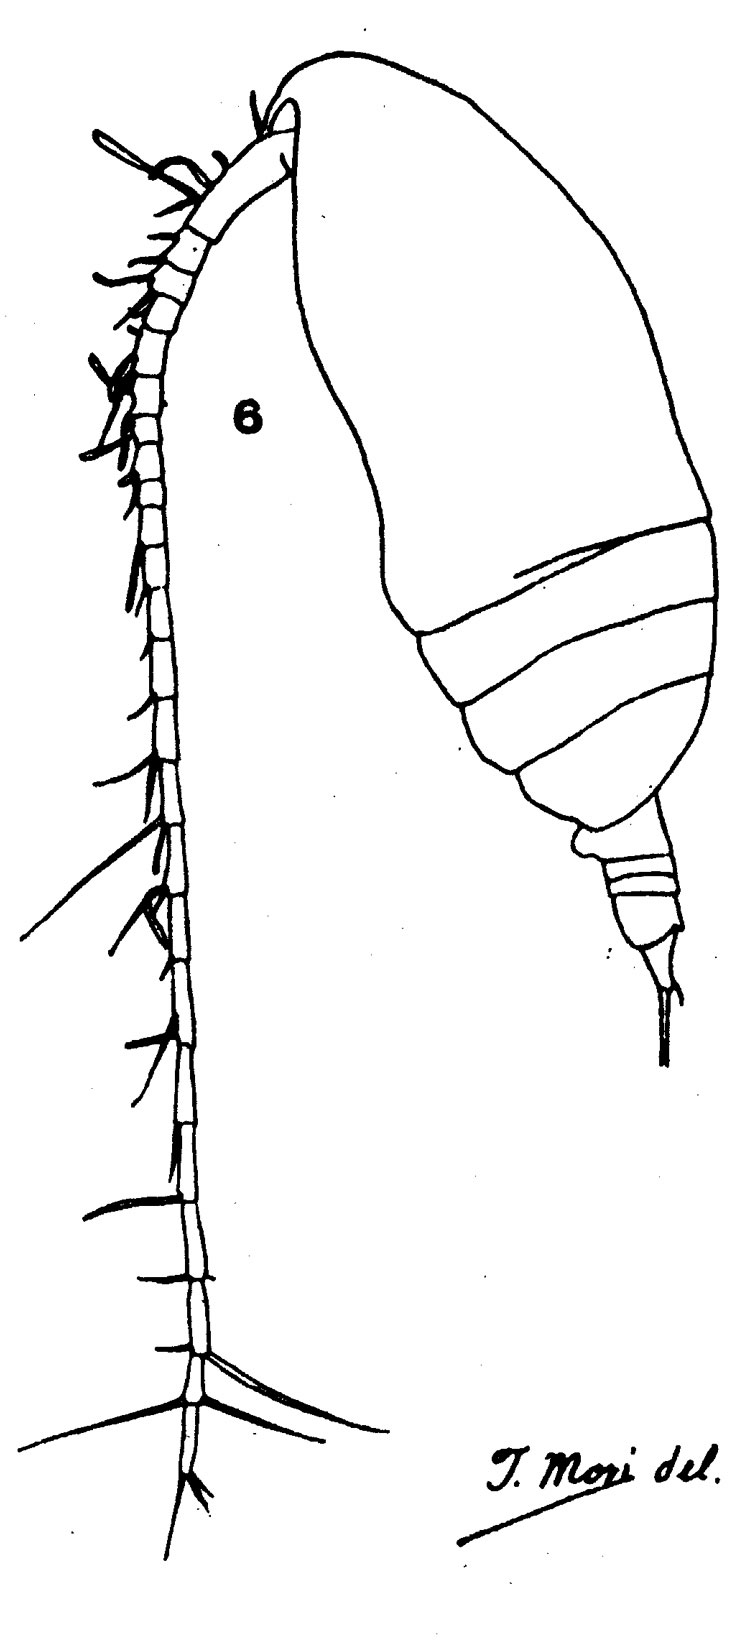 Species Acrocalanus longicornis - Plate 8 of morphological figures